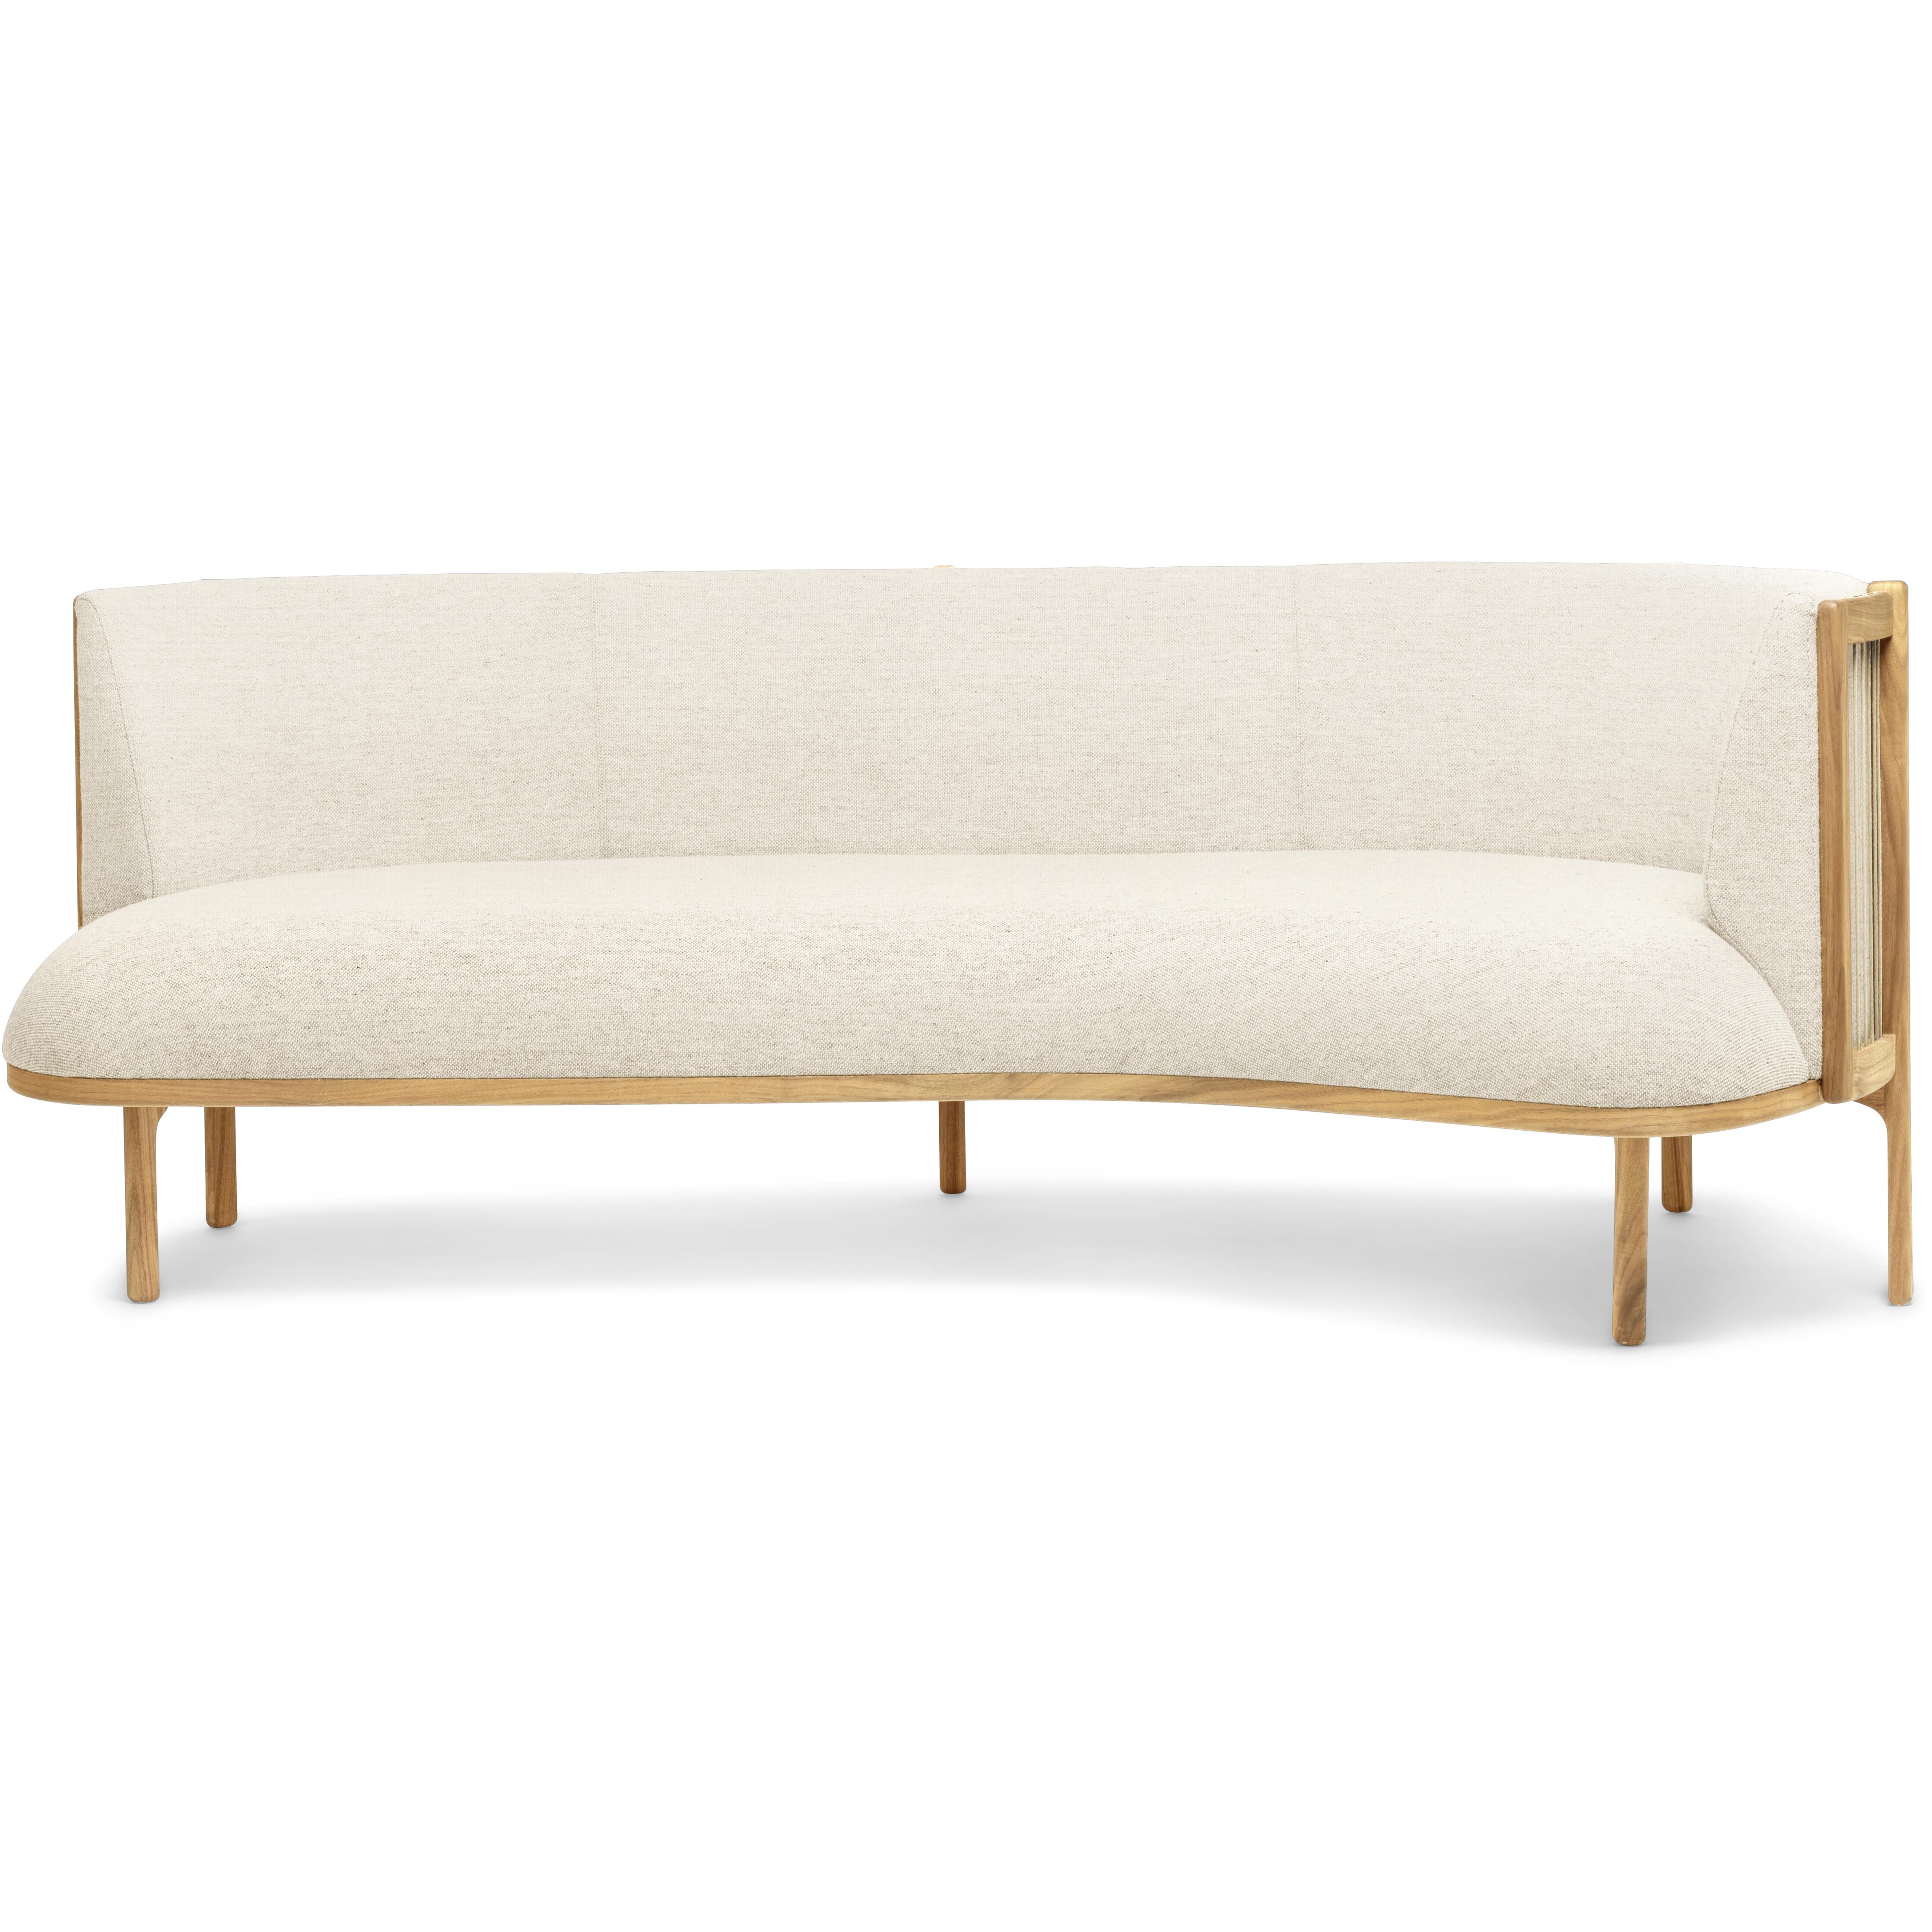 Carl Hansen Rf1903 R Sideways Sofa 3 Seater Right Oak Oil/Hallingdal 100 Fabric, White/Natural Brown